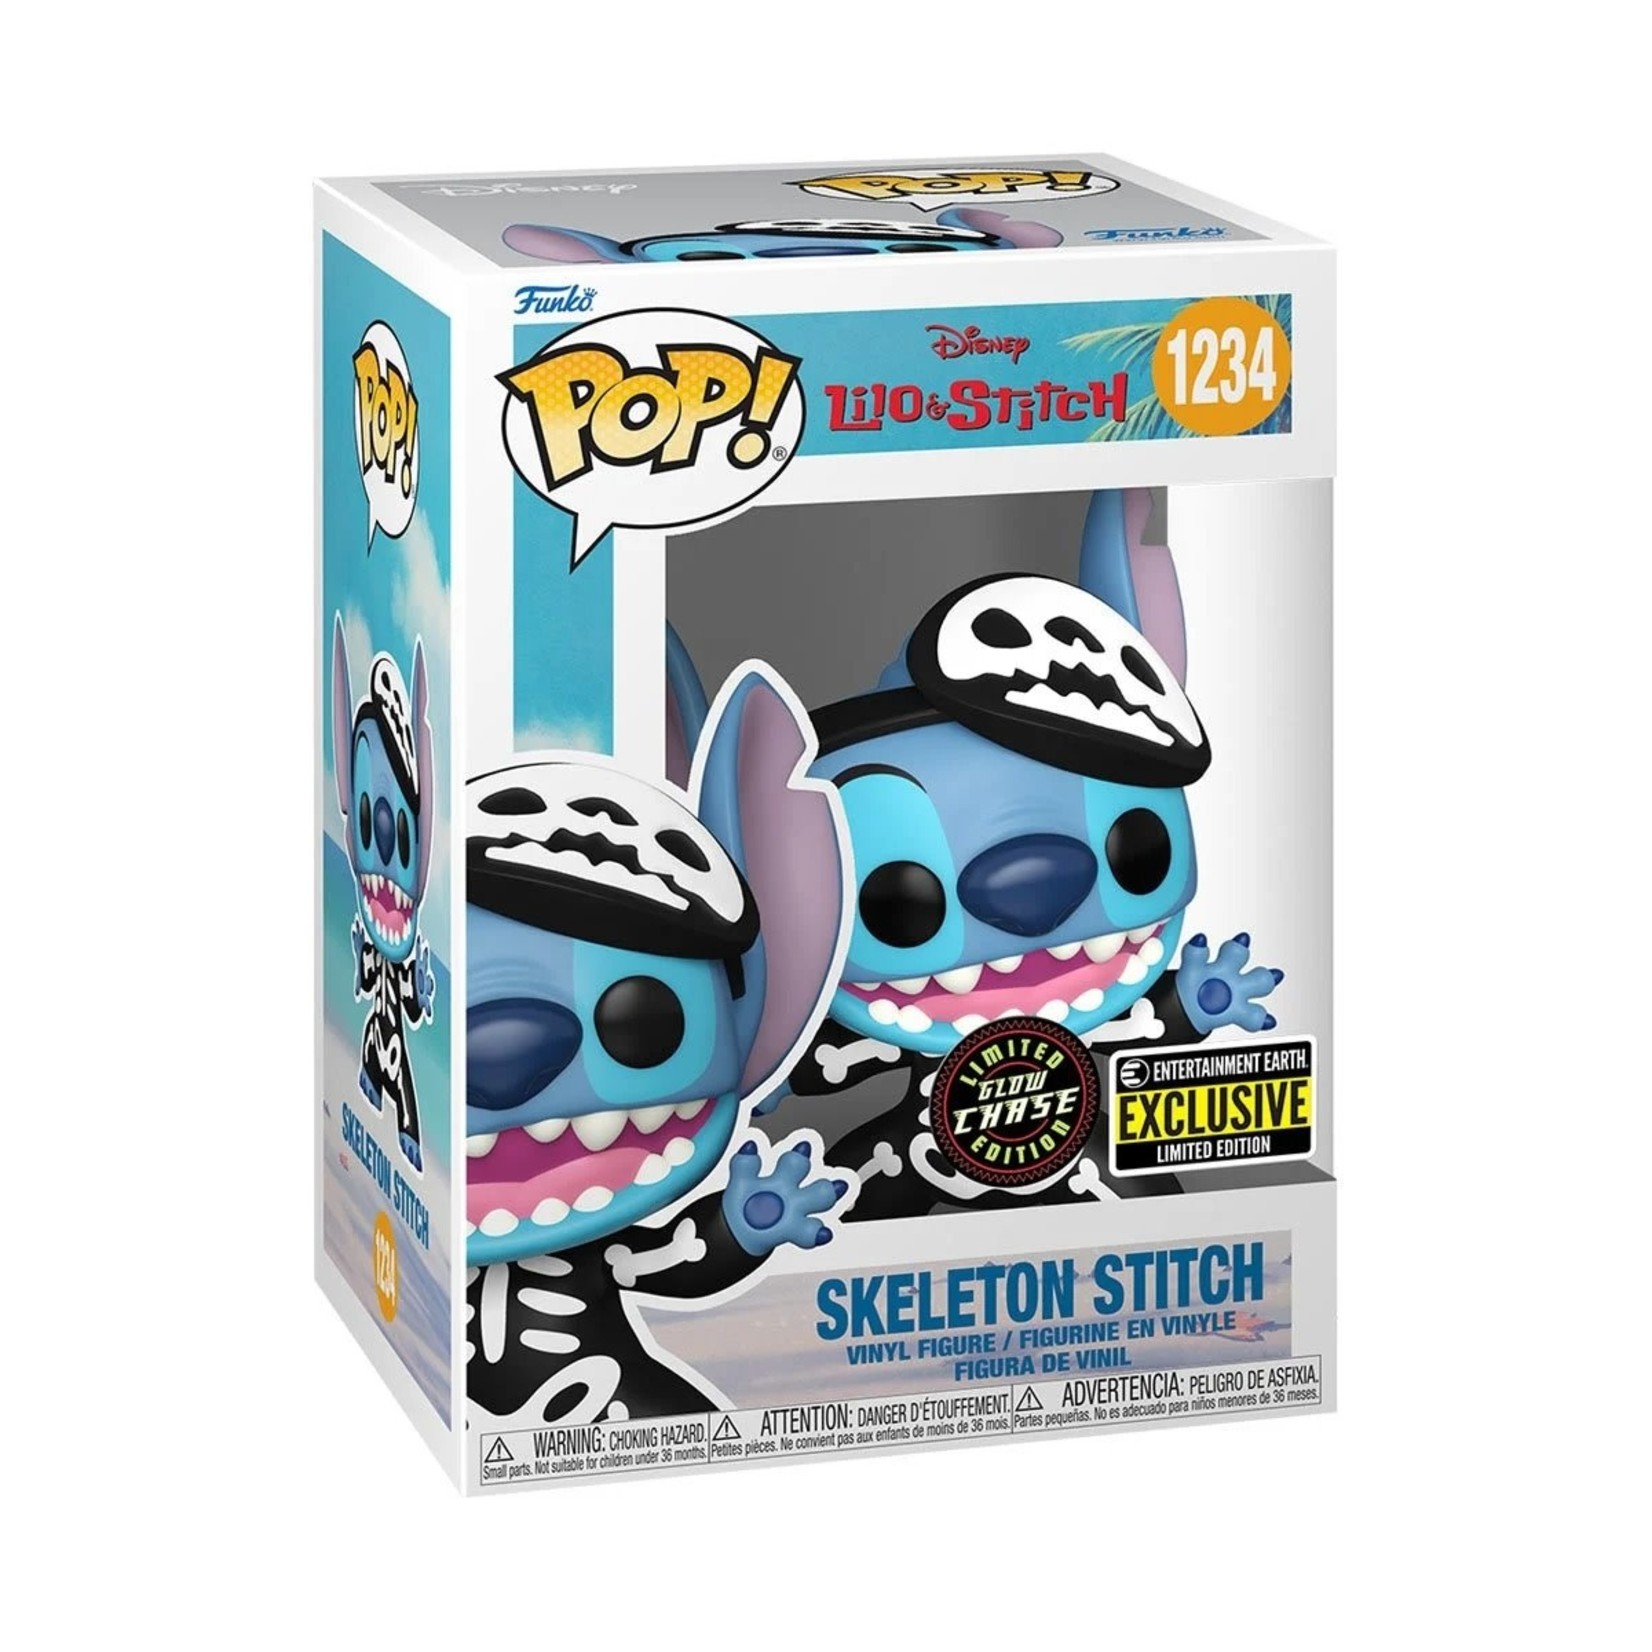 Funko Lilo & Stitch Skeleton Stitch Pop! Vinyl Figure - Entertainment Earth Exclusive